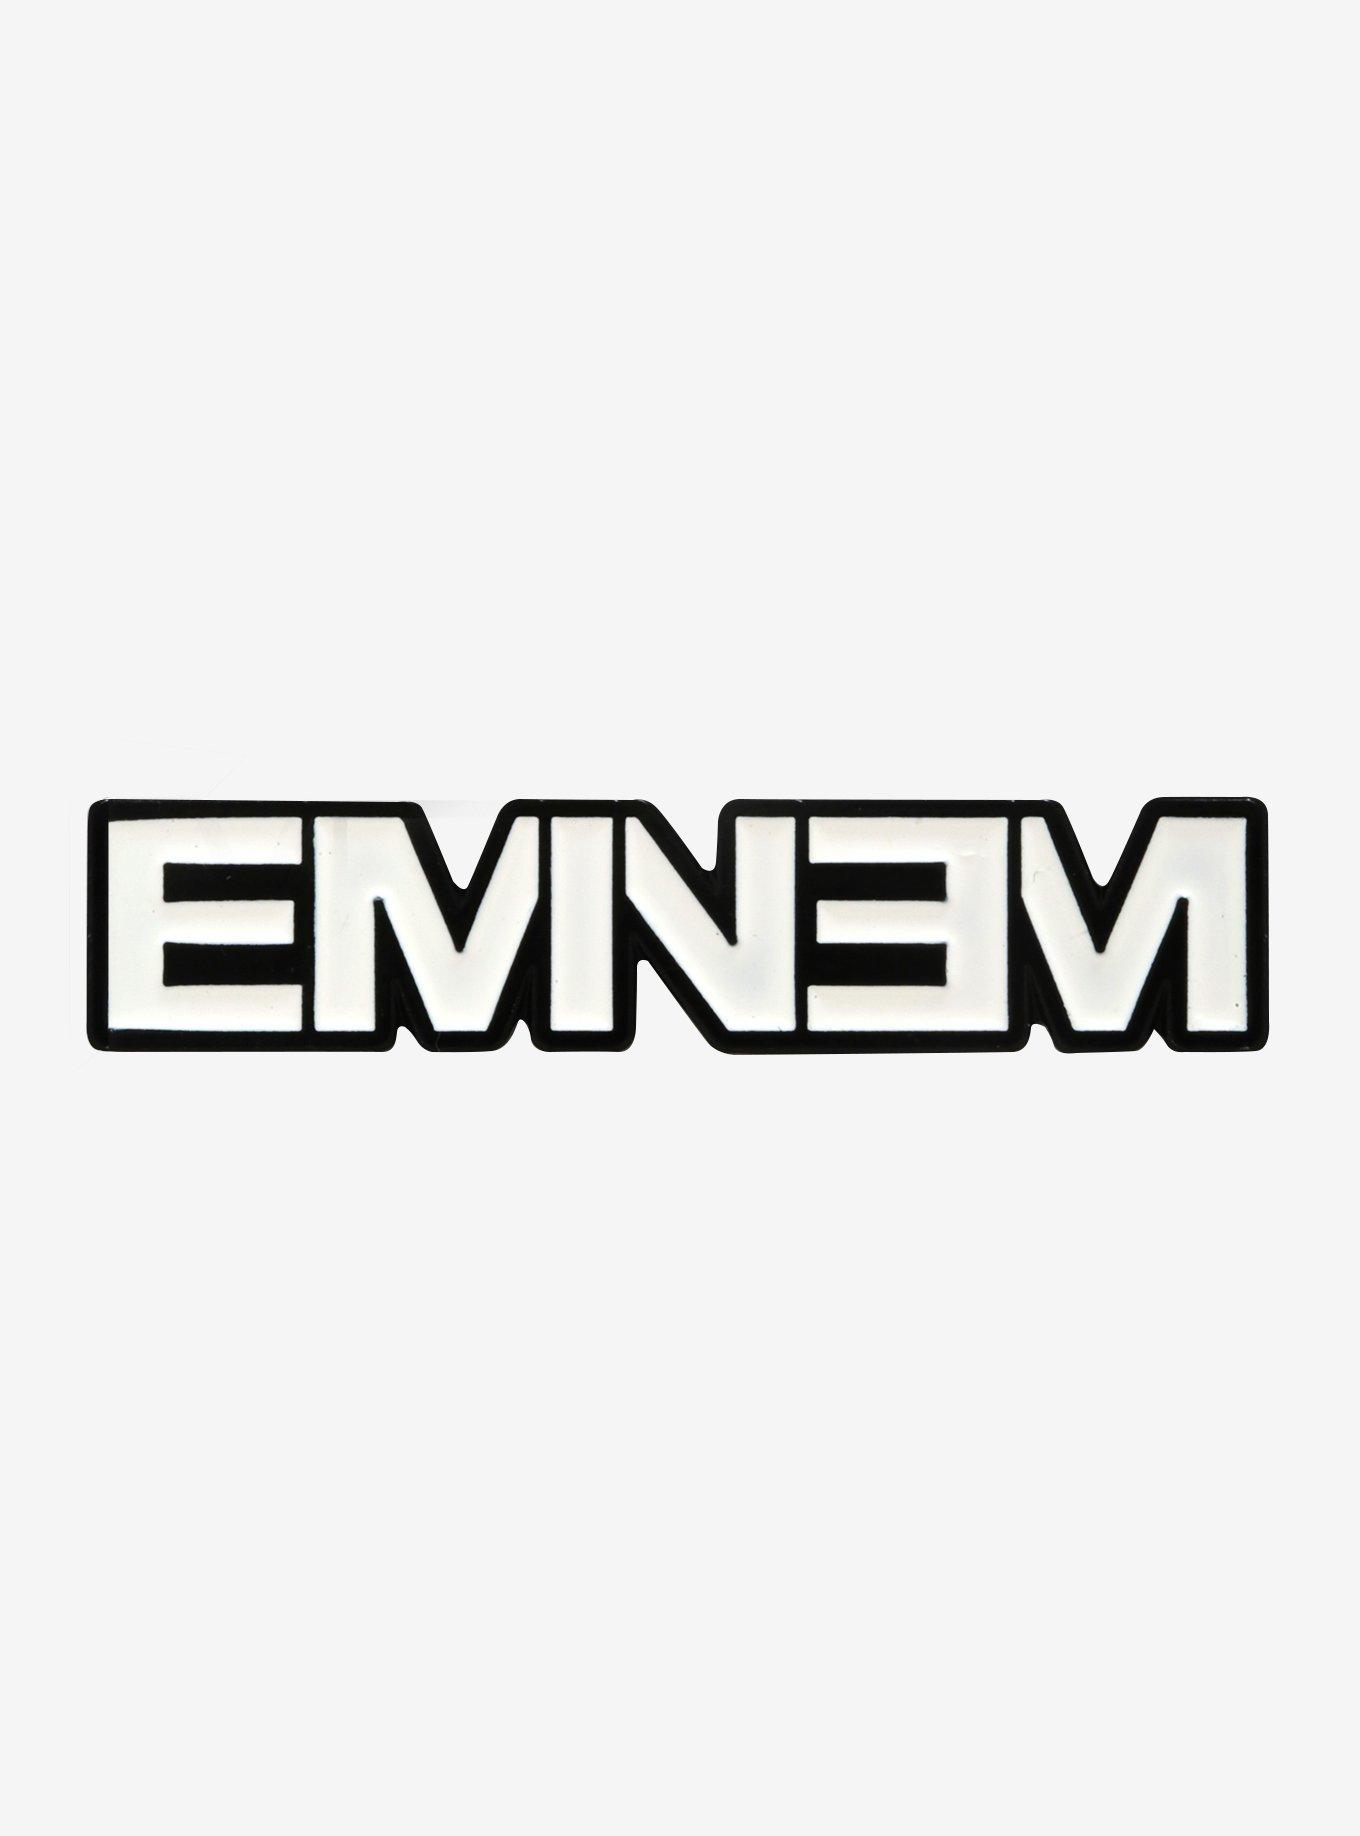 Pin on Eminem